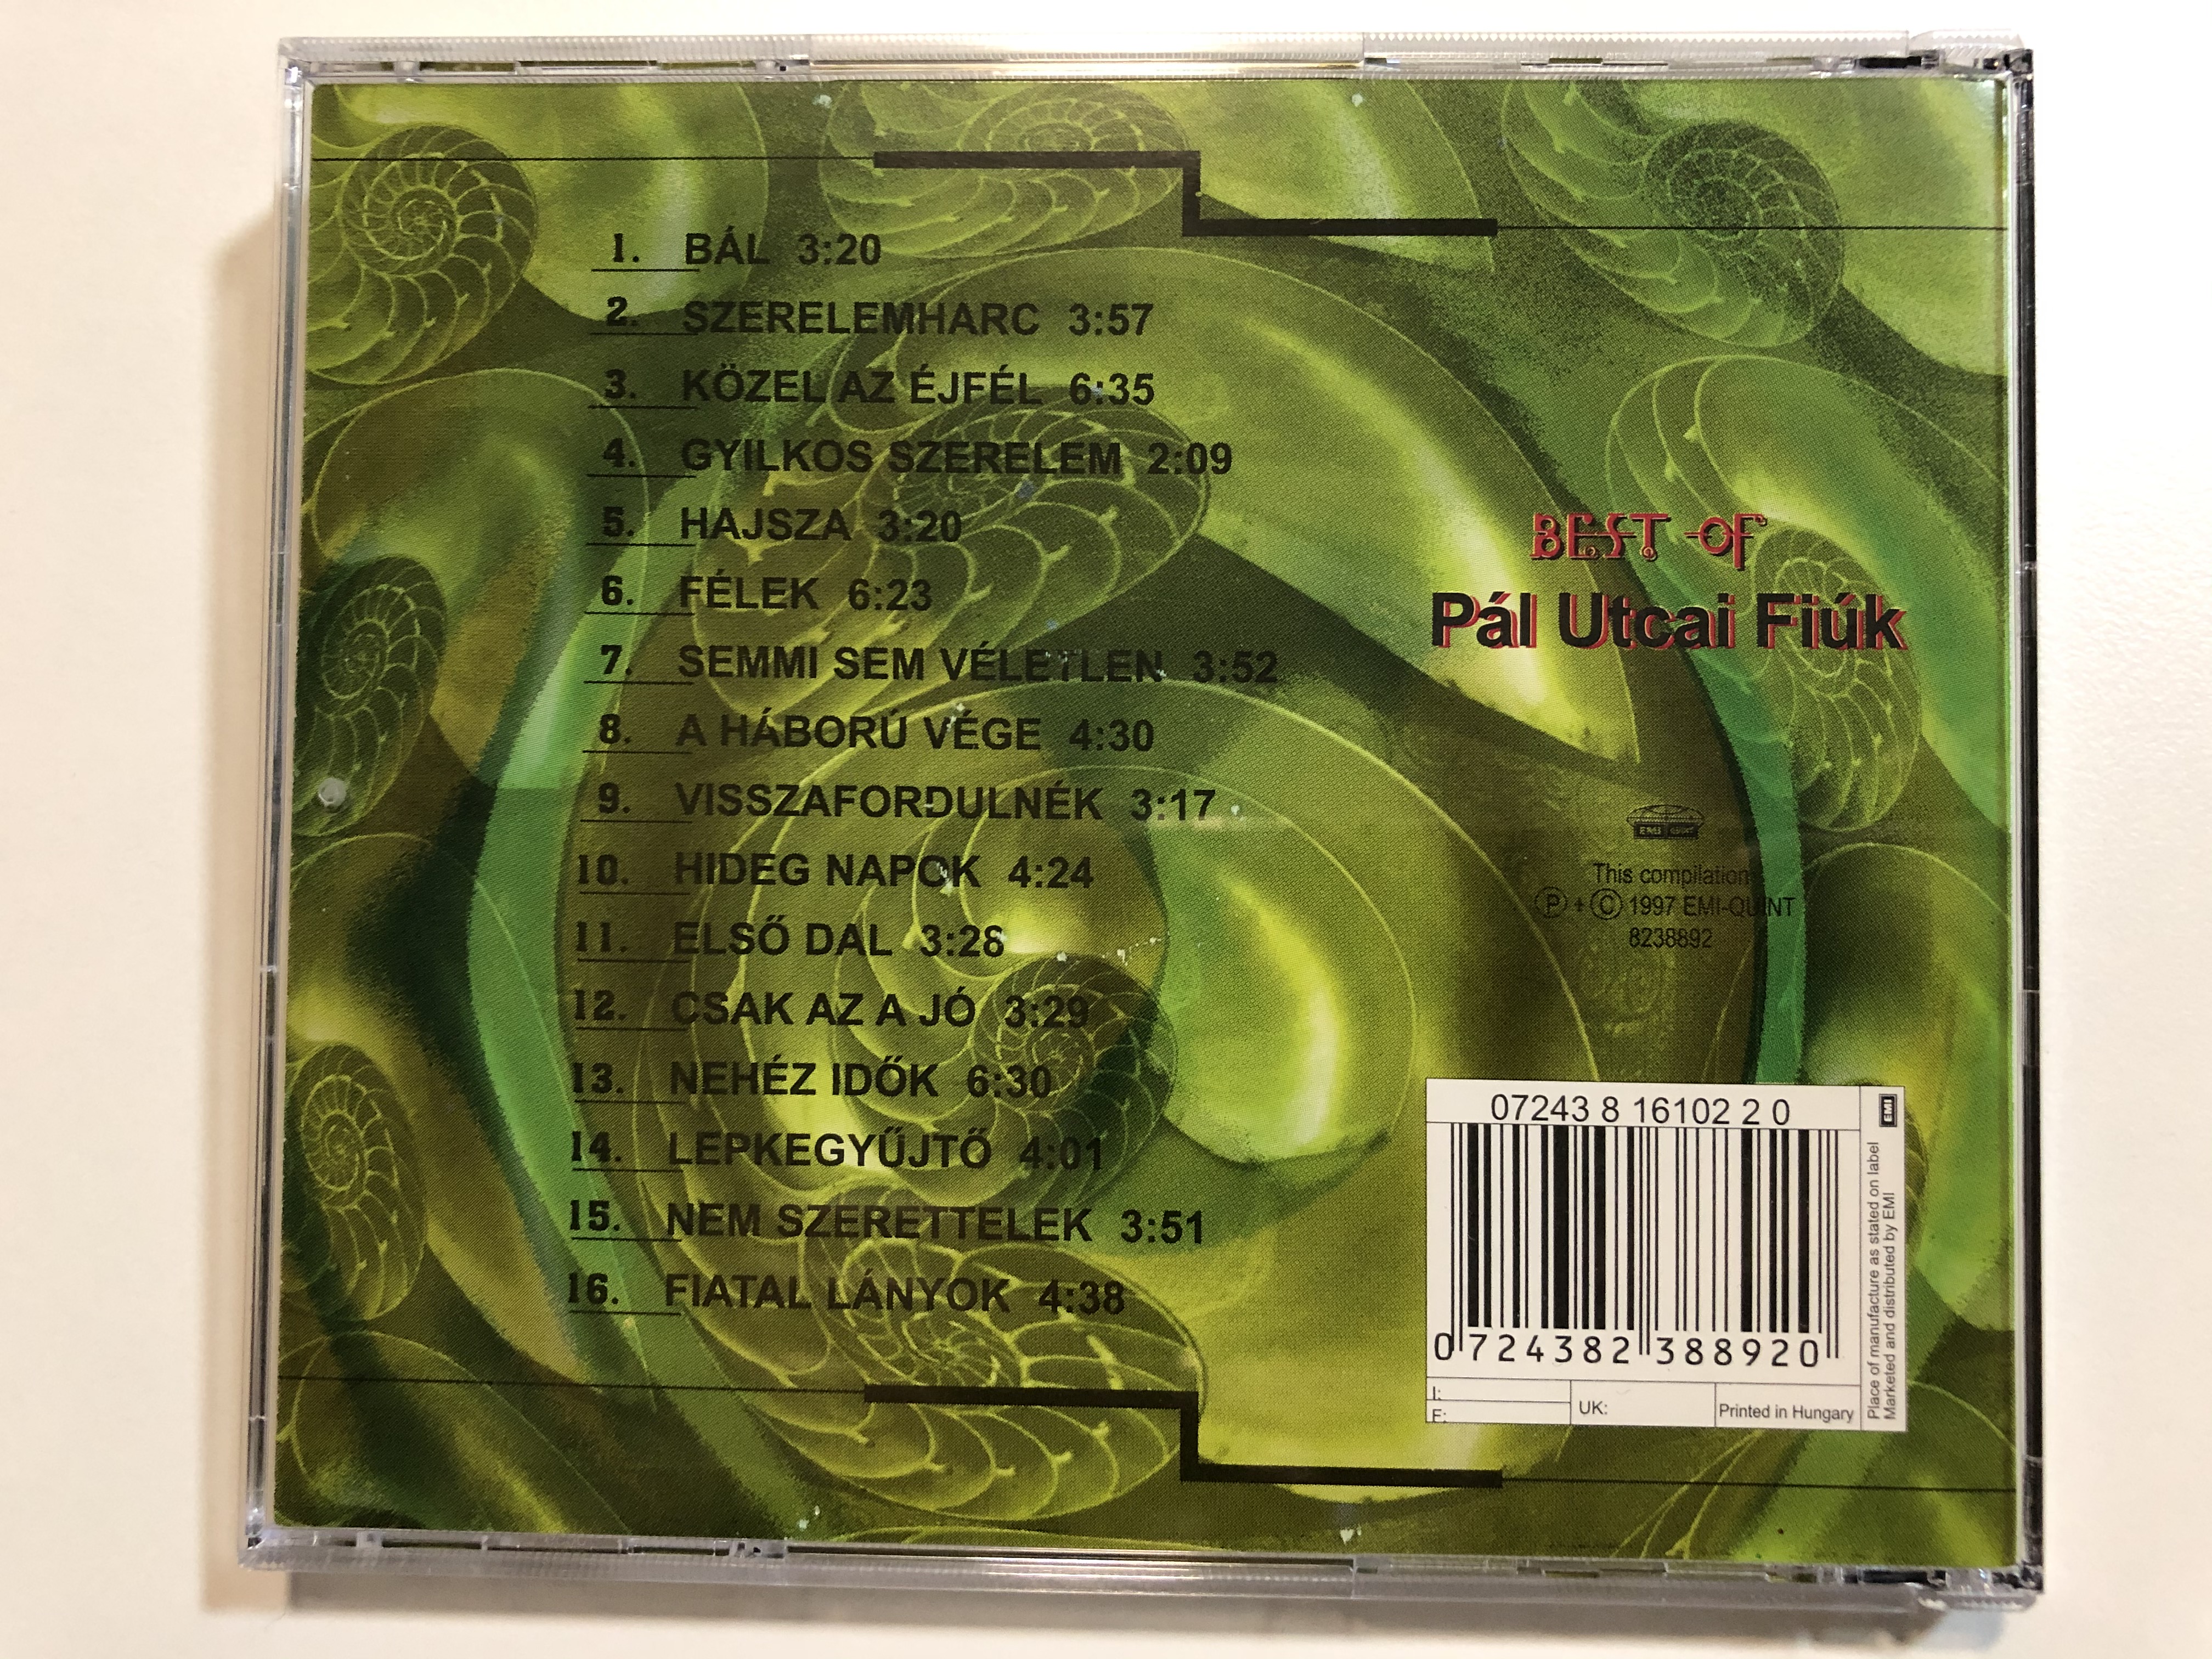 best-of-p-l-utcai-fi-k-a-legjobb-puf-dalok-egy-albumom-3-soha-meg-nema-jelent-demo-felvetel-emi-quint-audio-cd-1997-8238892-6-.jpg